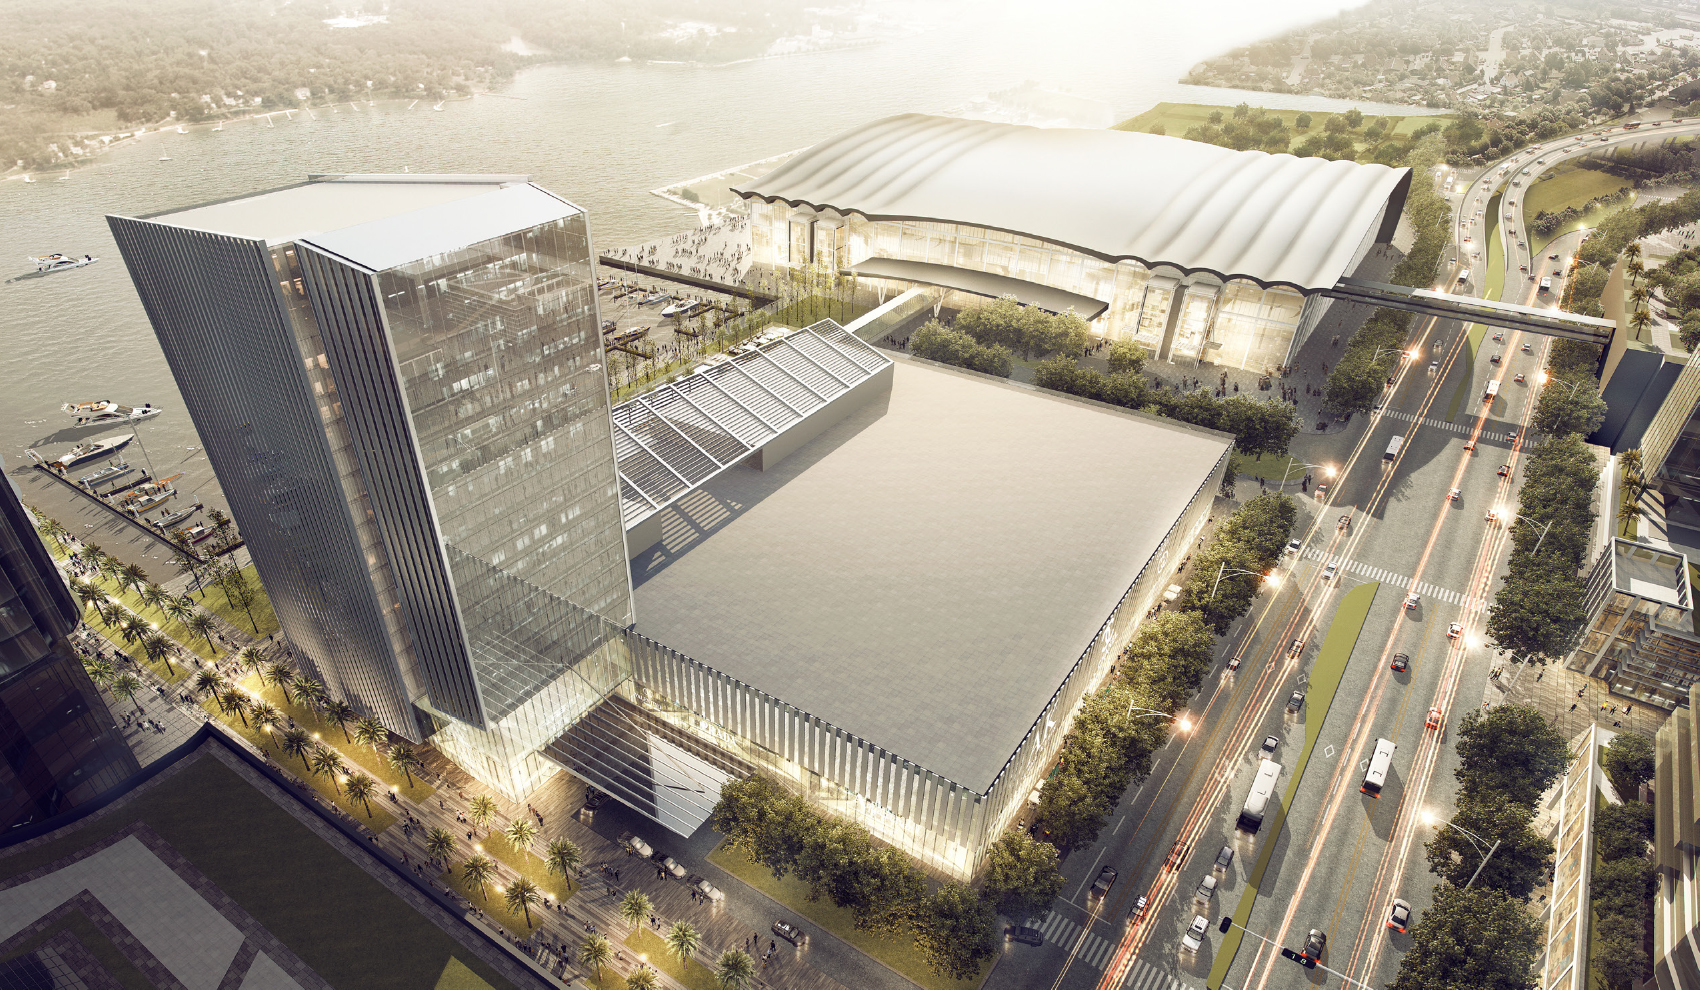 Jacksonville Jaguars owner Shad Khan has proposed building a convention center in Metropolitan Park.